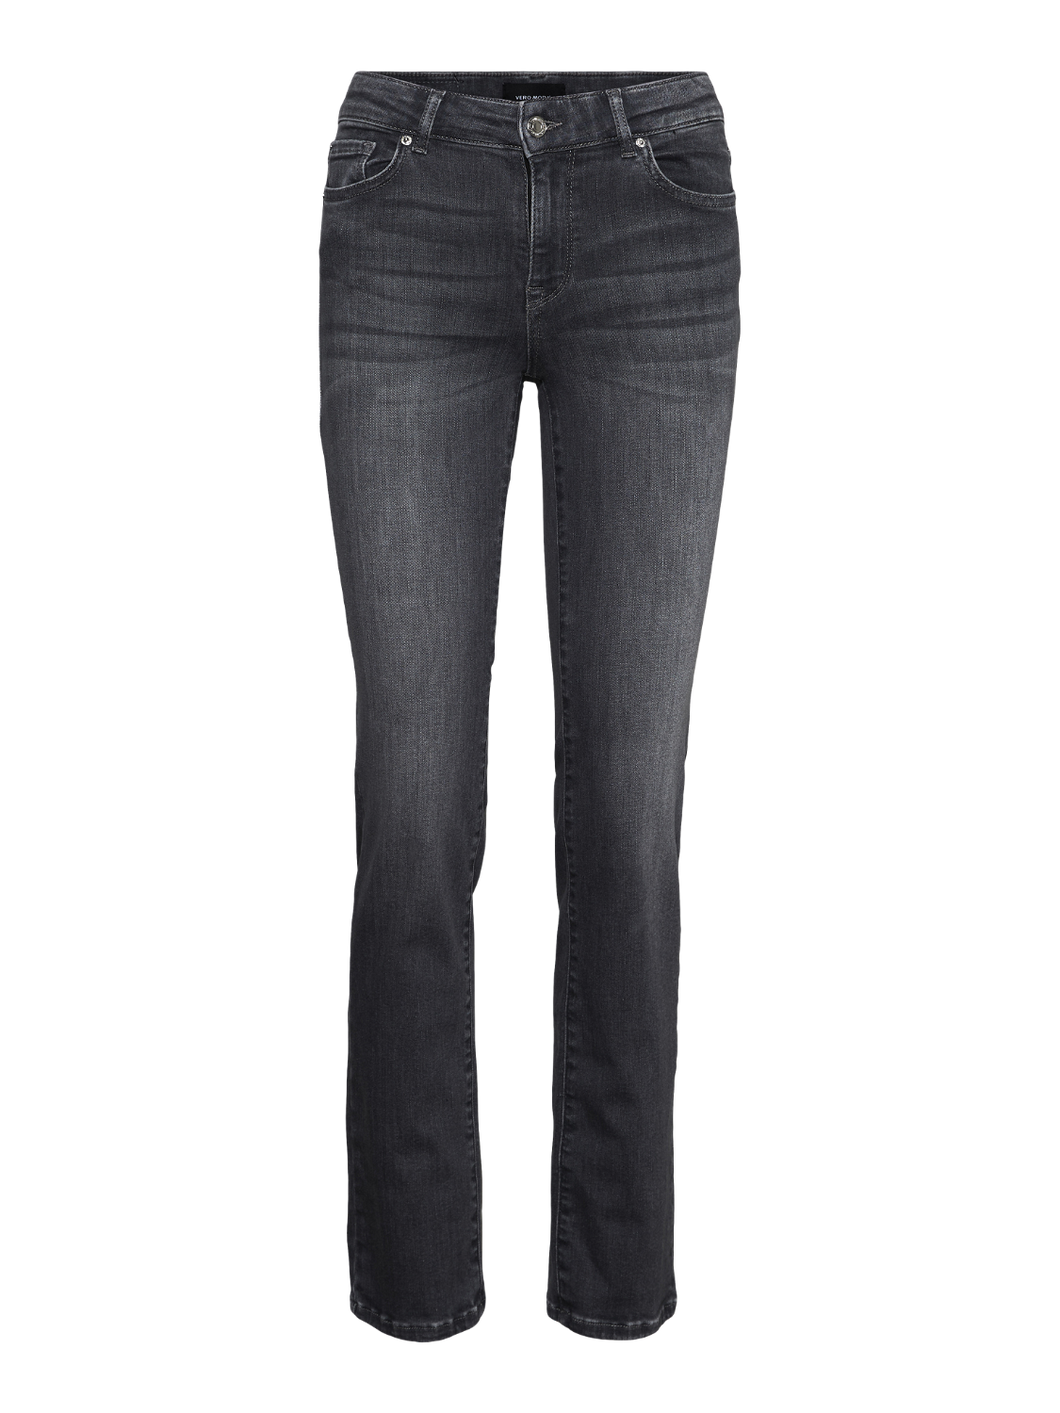 VMDAF Jeans - Medium Grey Denim